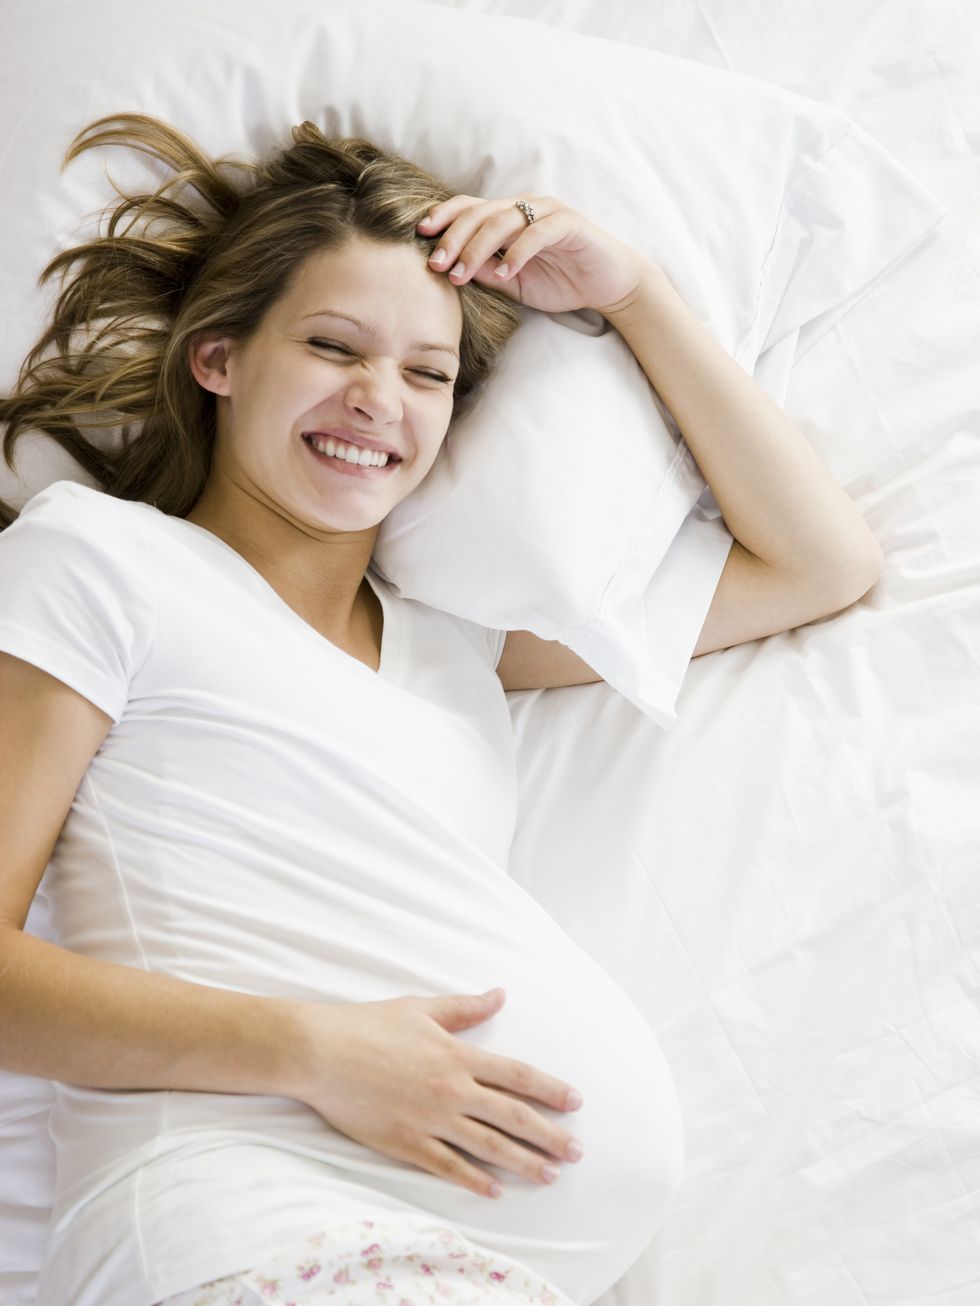 mujer embarazada tumbada en la cama riéndose